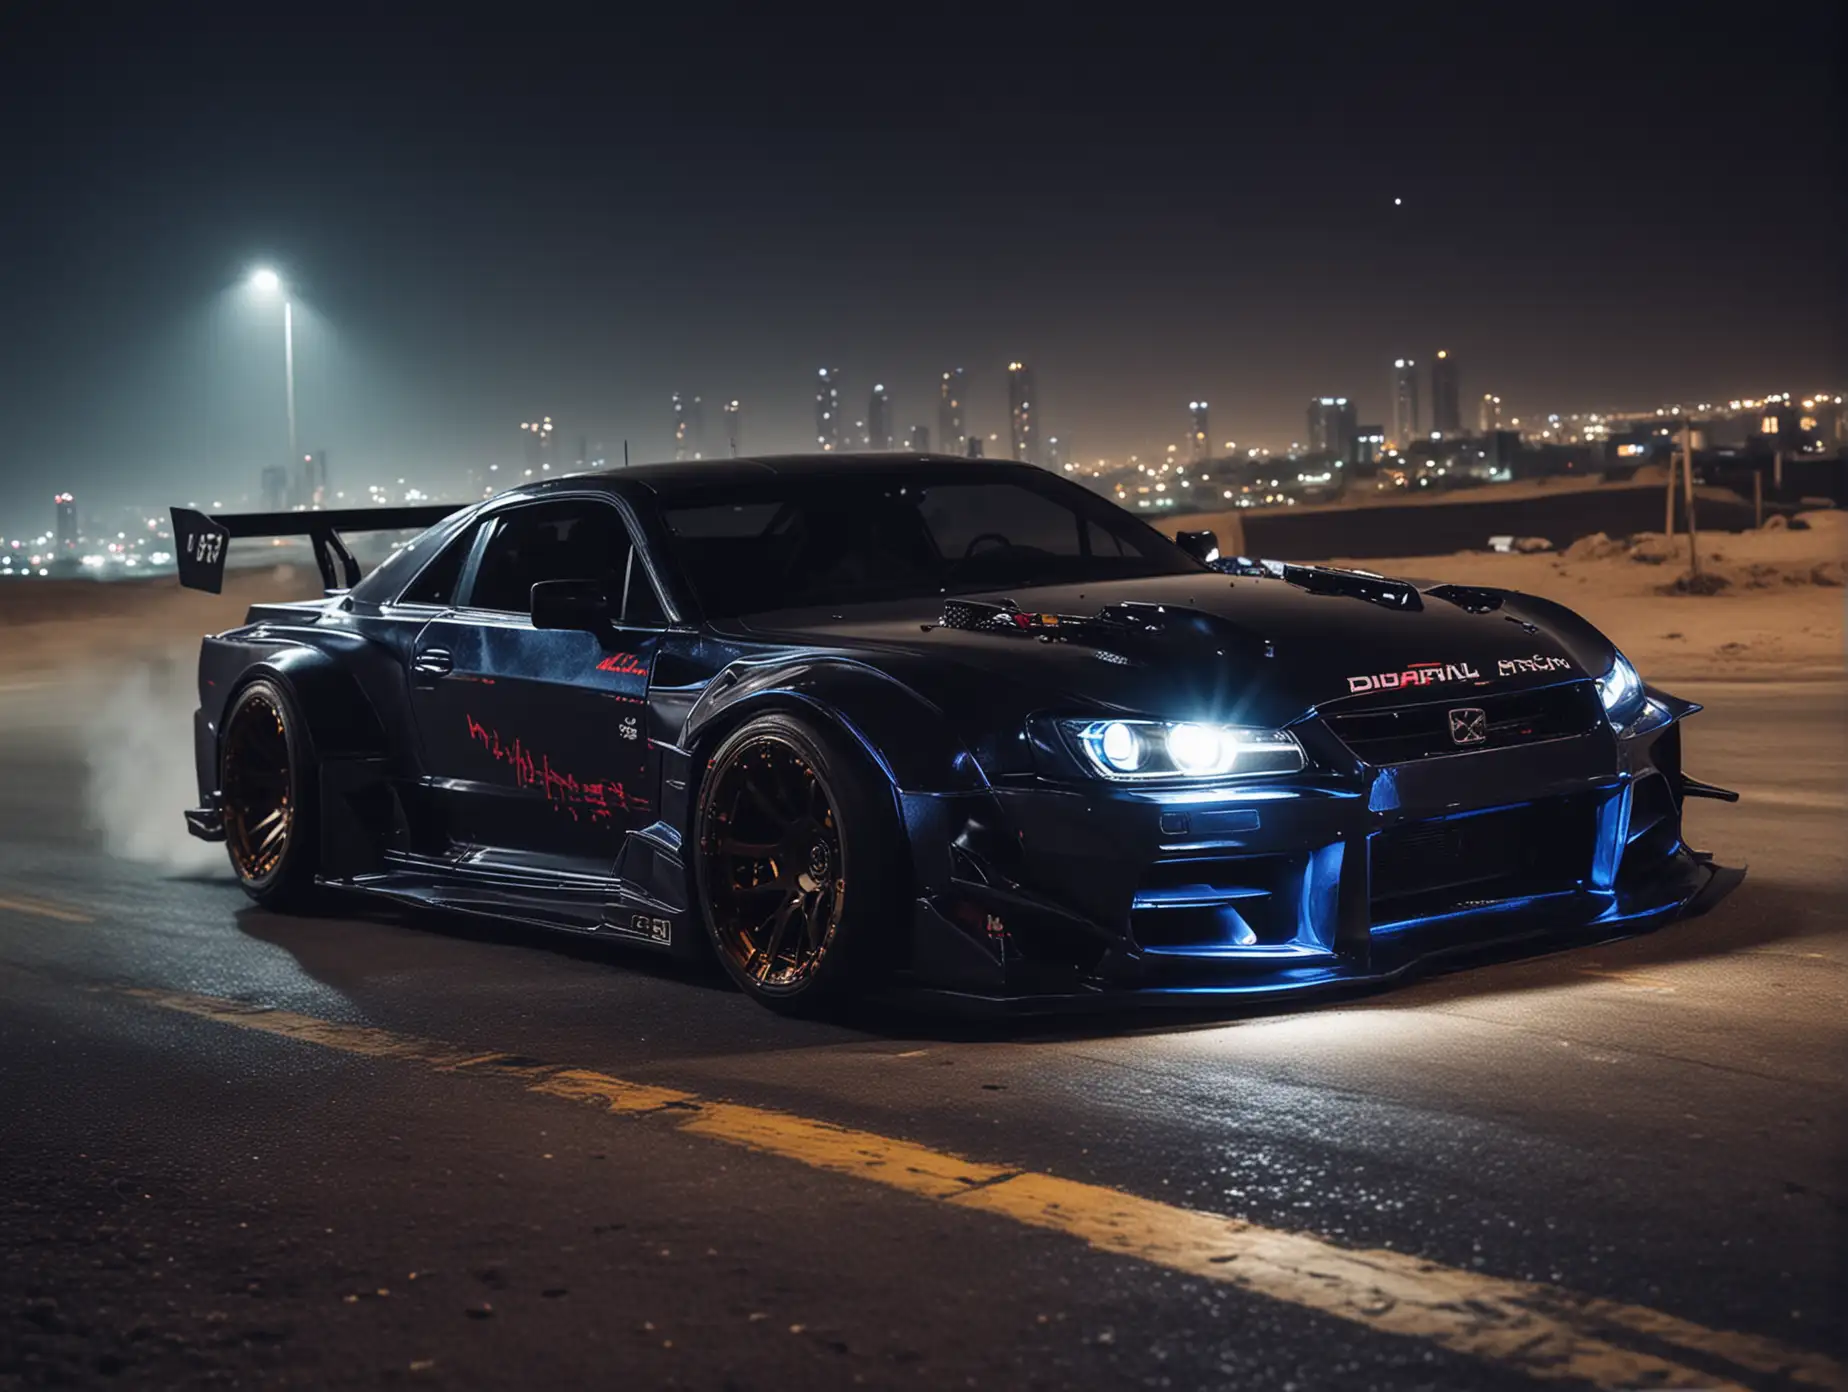 Futuristic-Japanese-Drifting-Cars-at-Night-in-Dubai